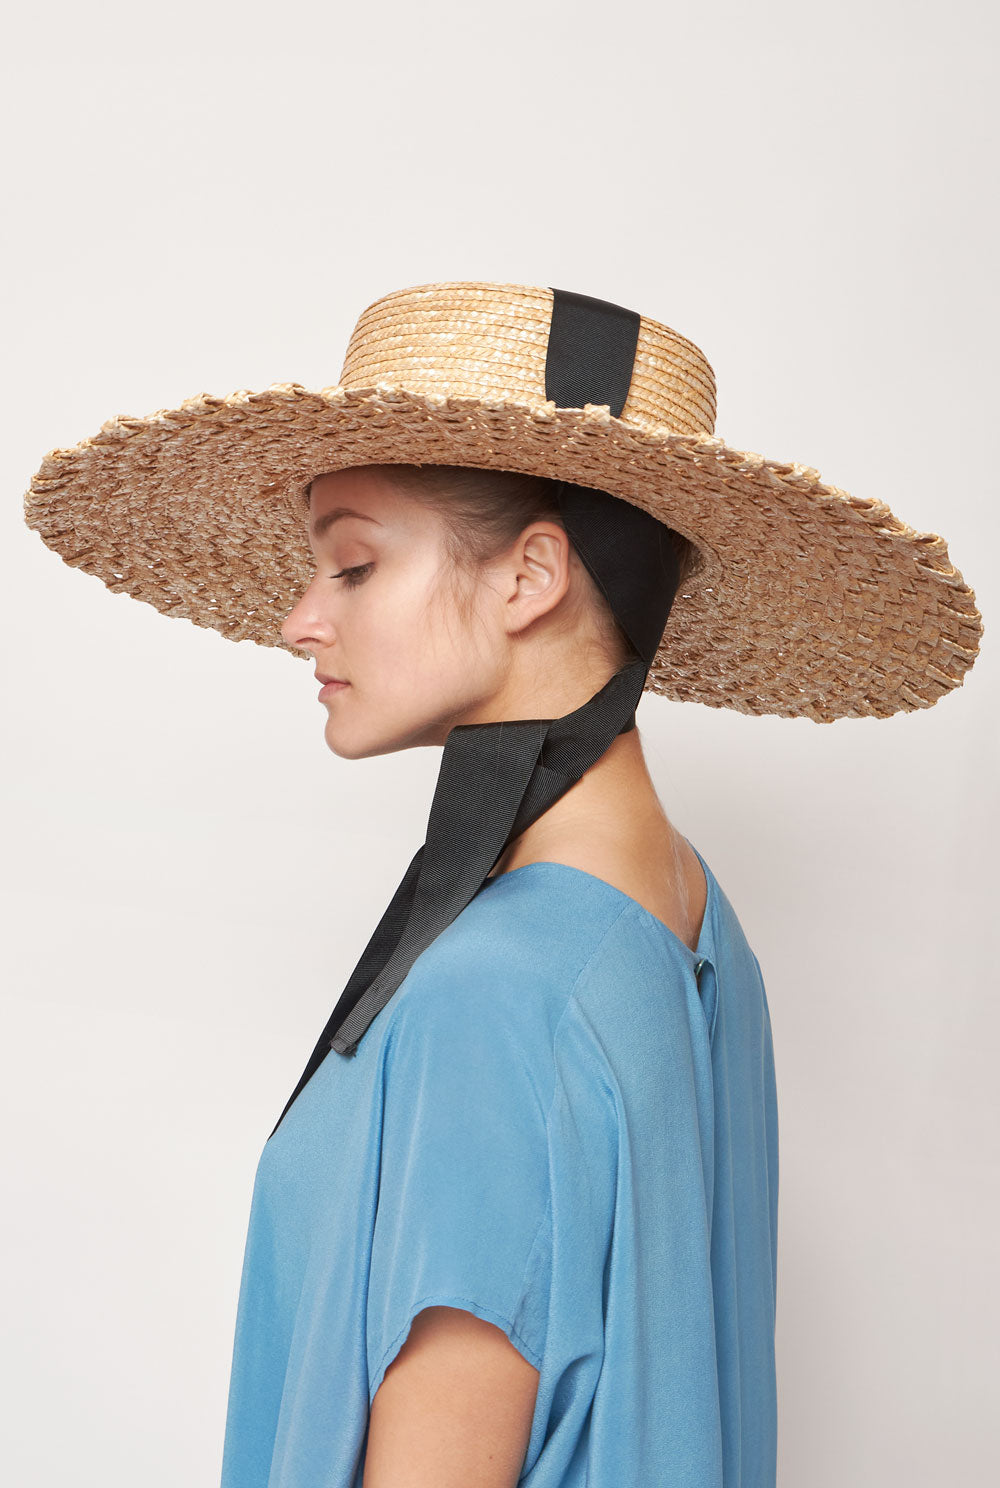 Tris-Tras natural hat headpiece Zahati 